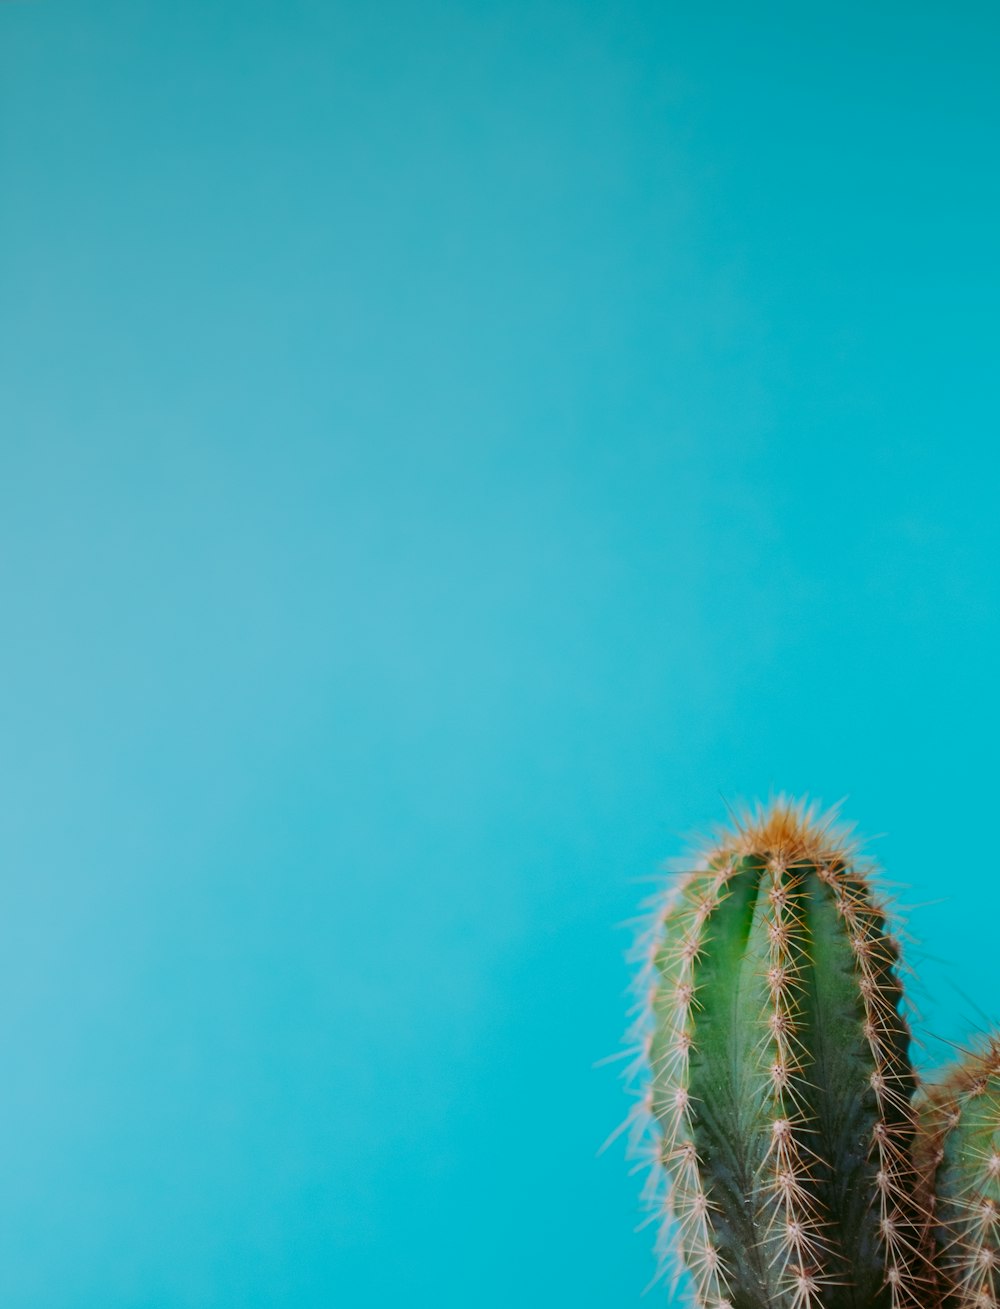 fotografia minimalista di cactus verde